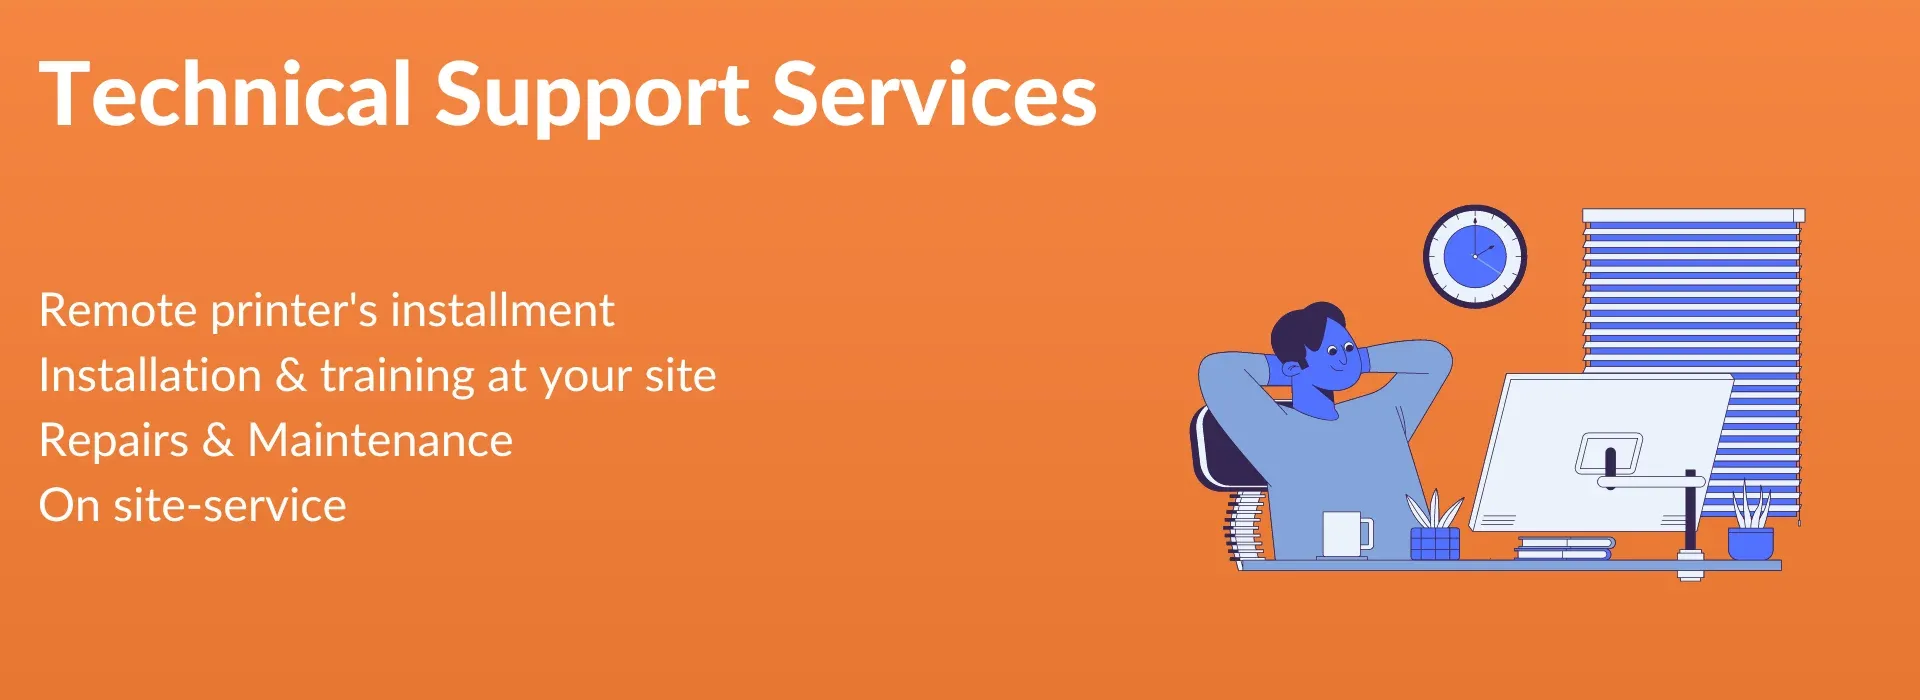 66-technical-support-services-11920x700-px-en